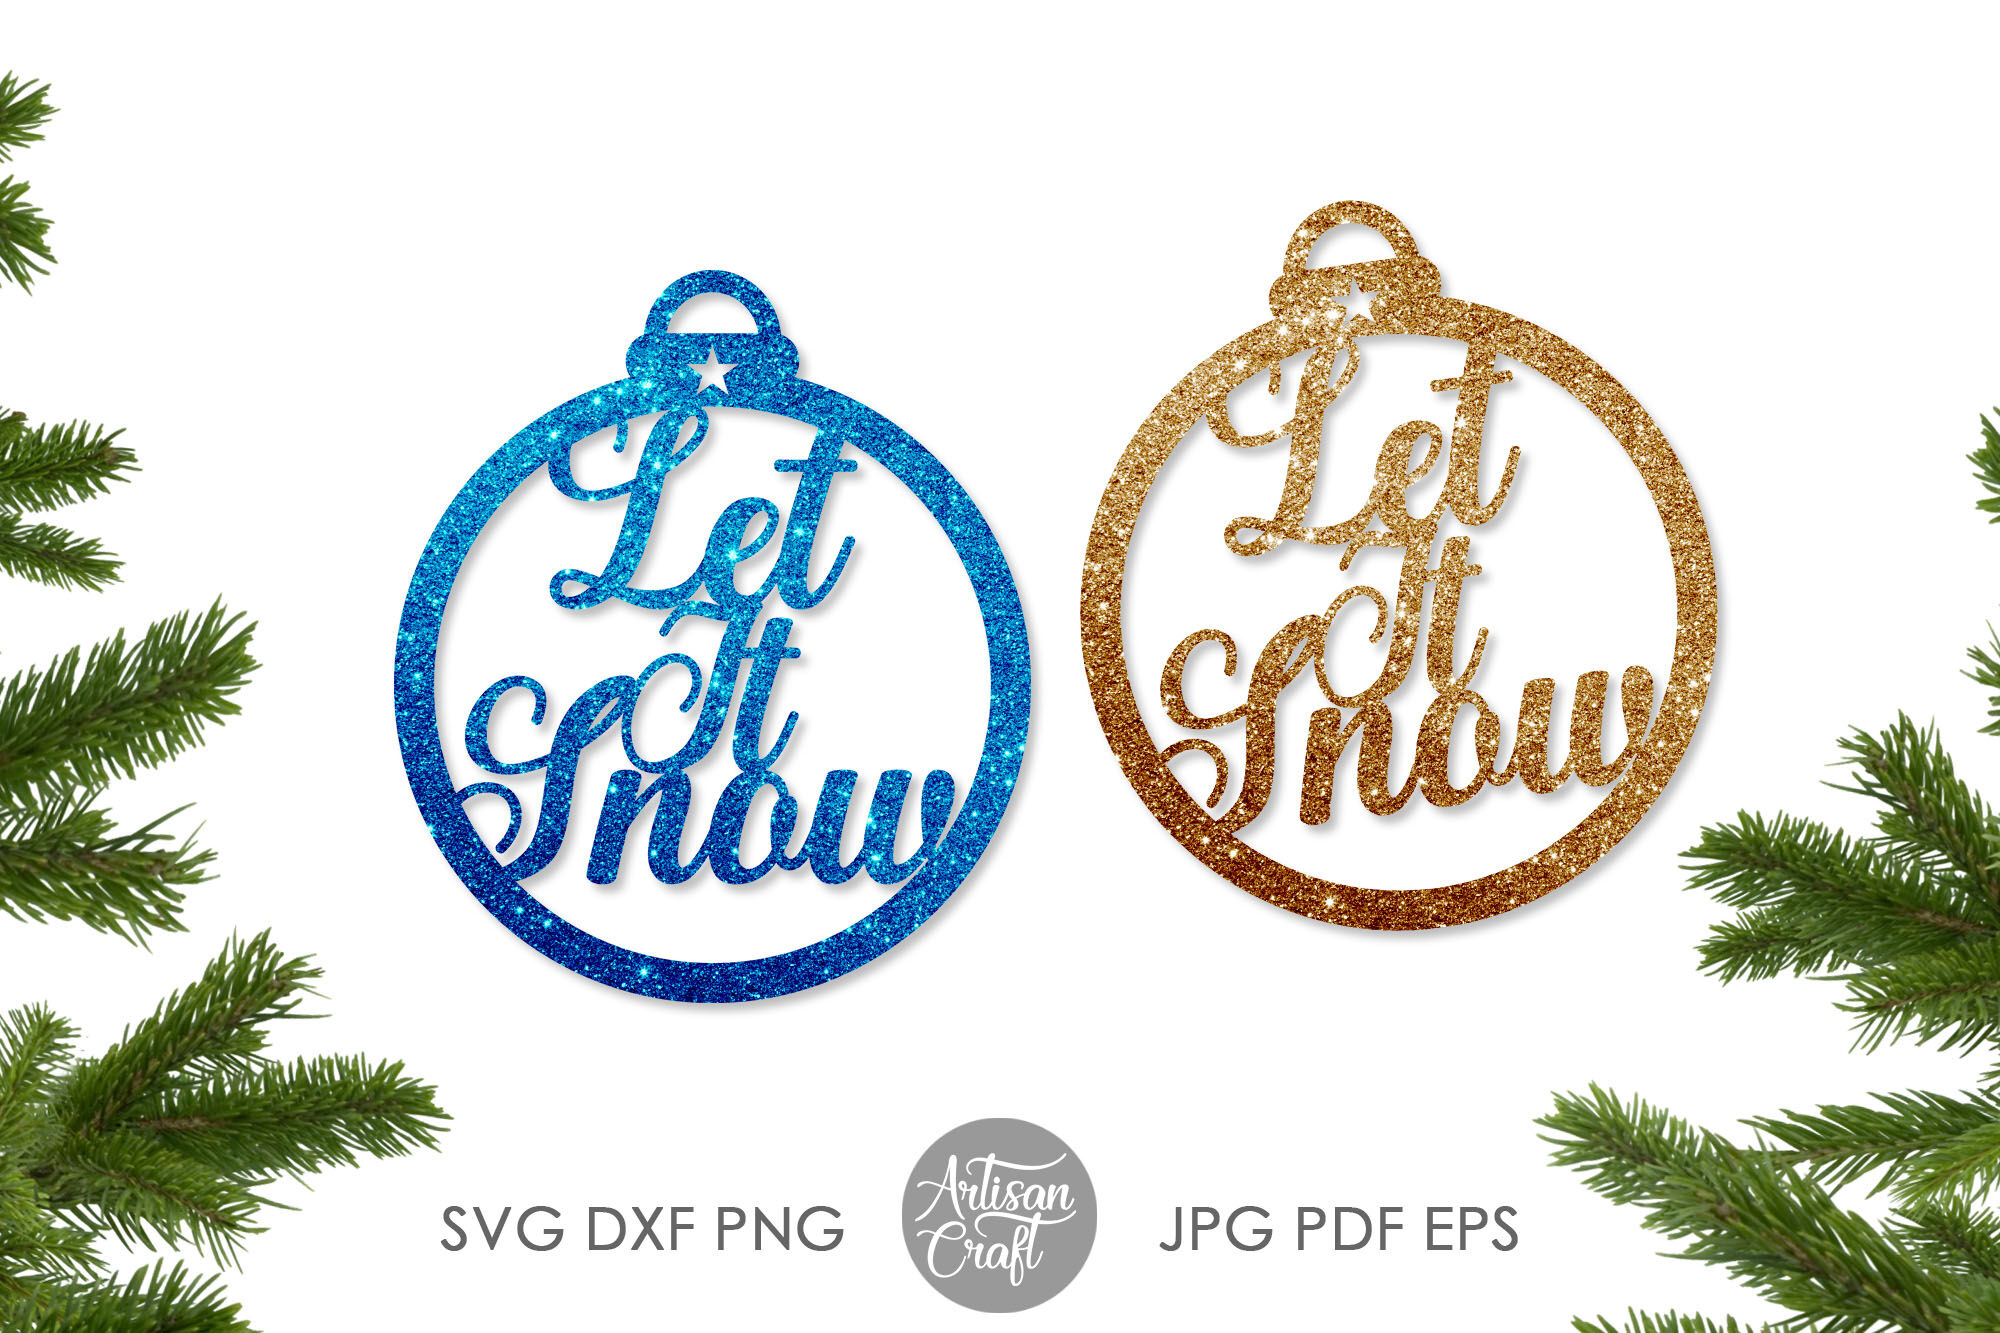 Let It Snow Christmas Ornaments Single Line Svg By Artisan Craft Svg Thehungryjpeg Com